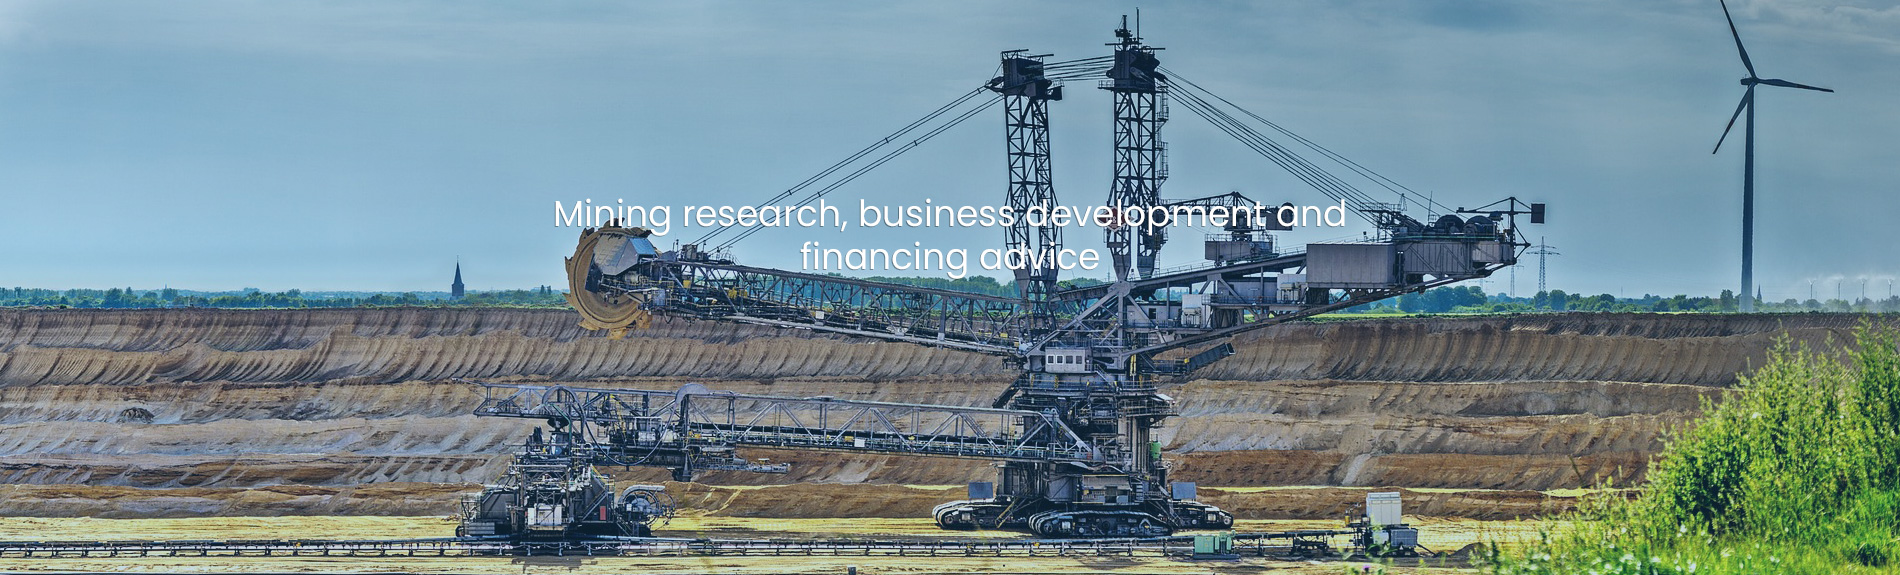 Mining Research, business development & financial advice